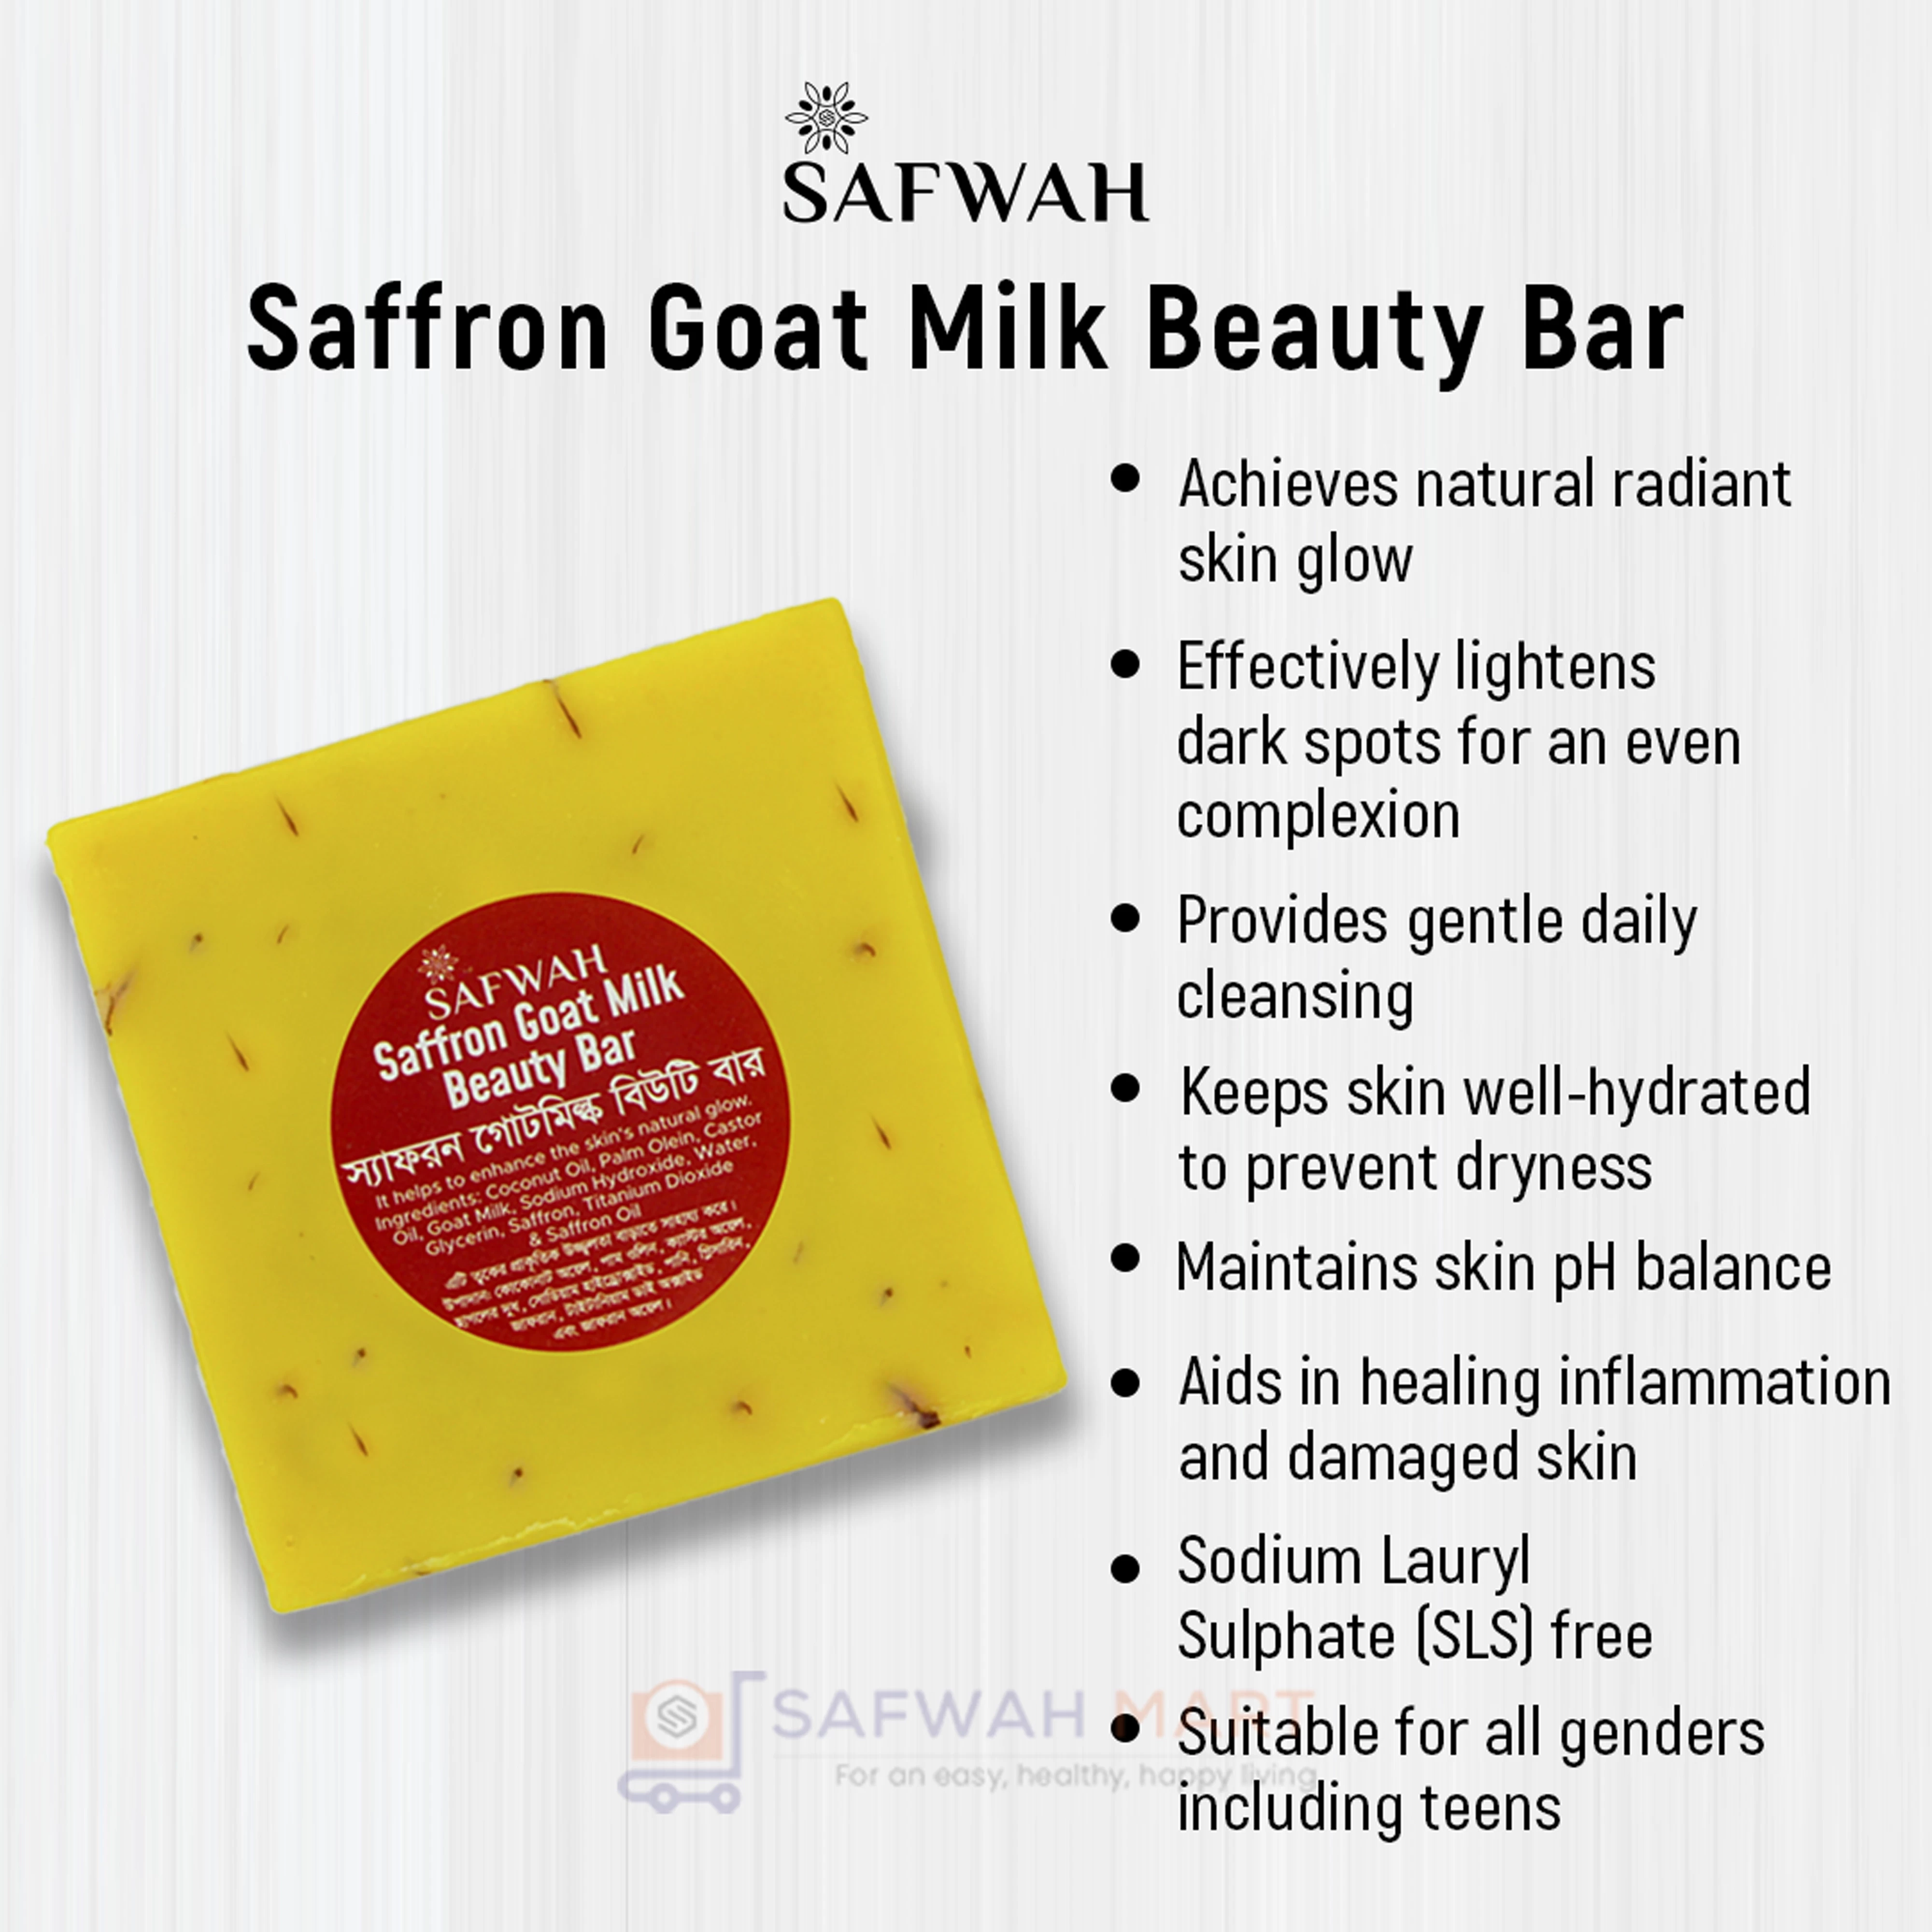 Safwah Saffron Goat Milk Beauty Bar